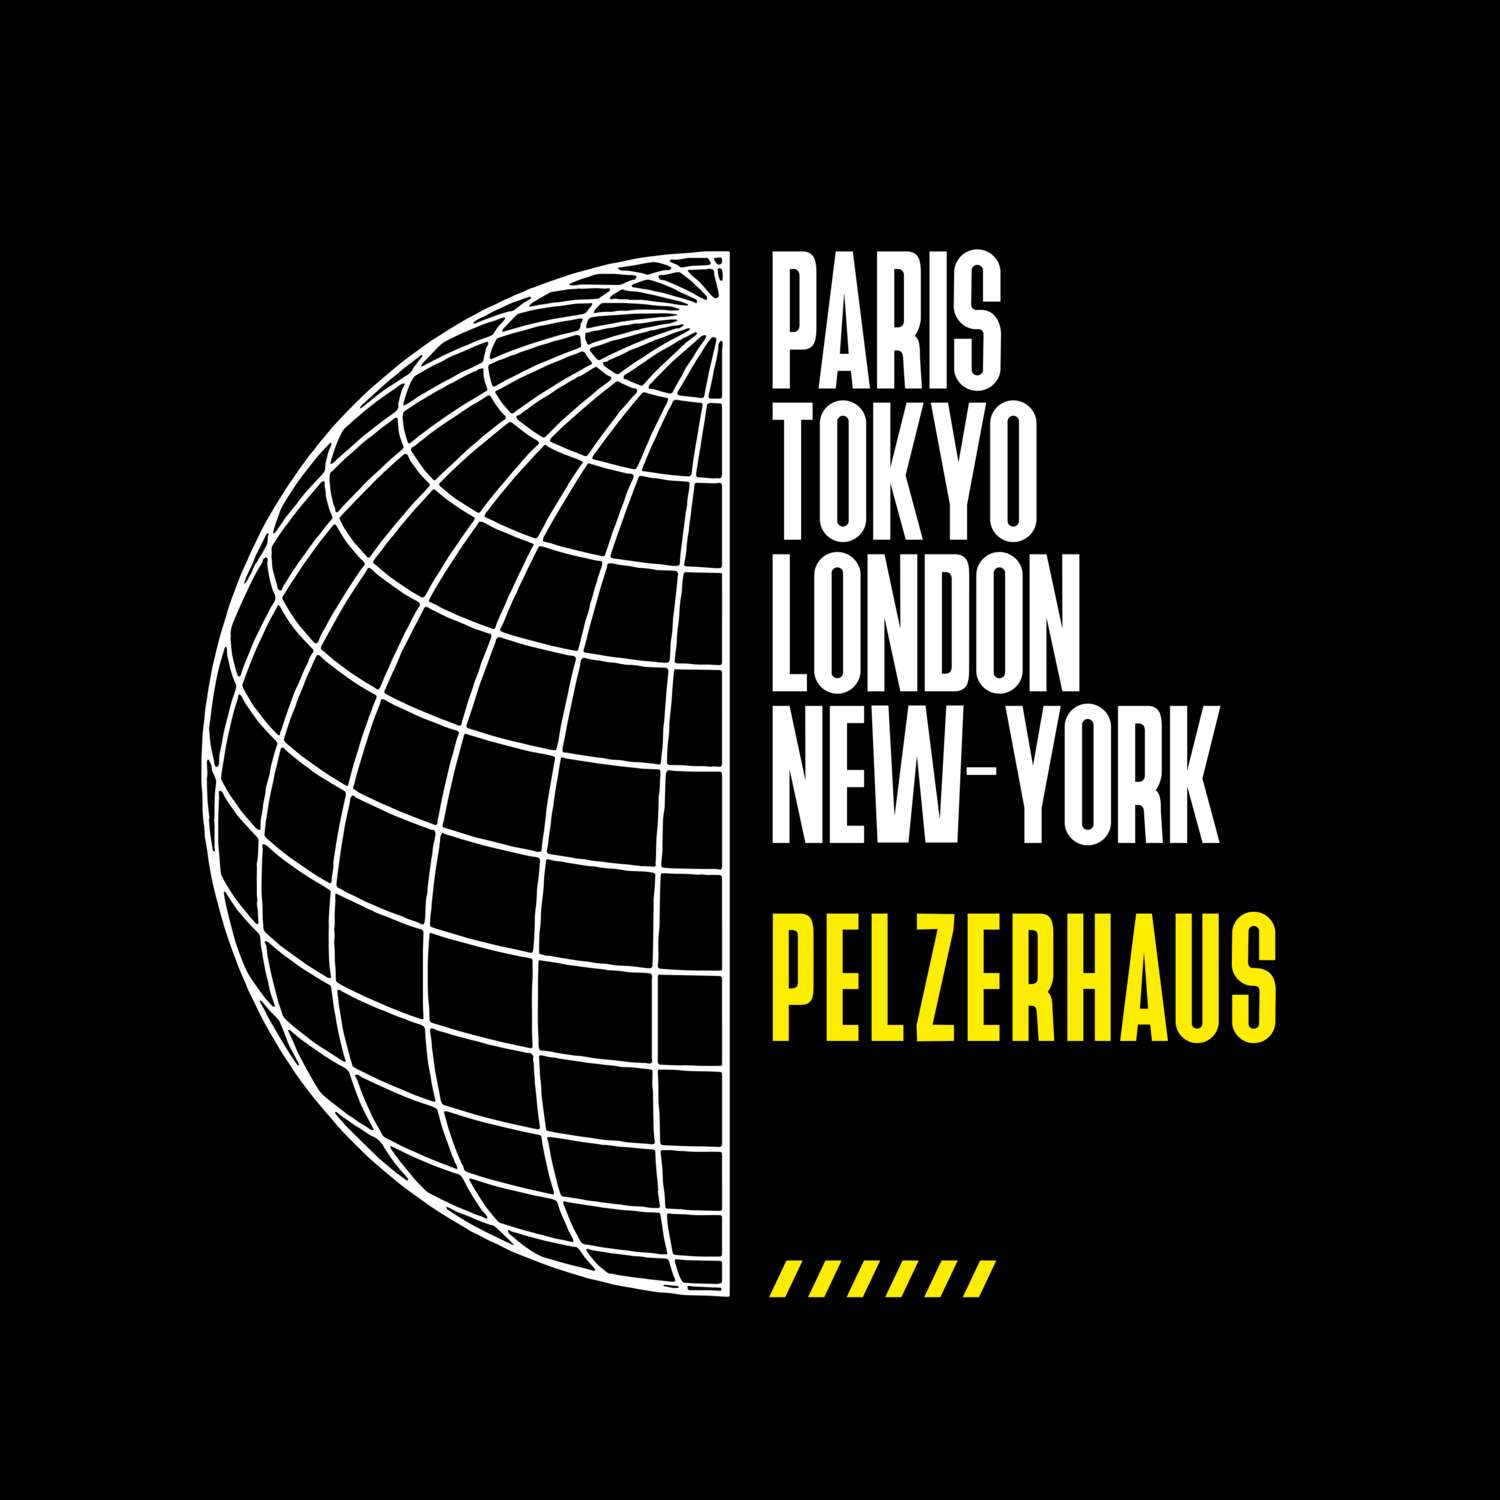 Pelzerhaus T-Shirt »Paris Tokyo London«